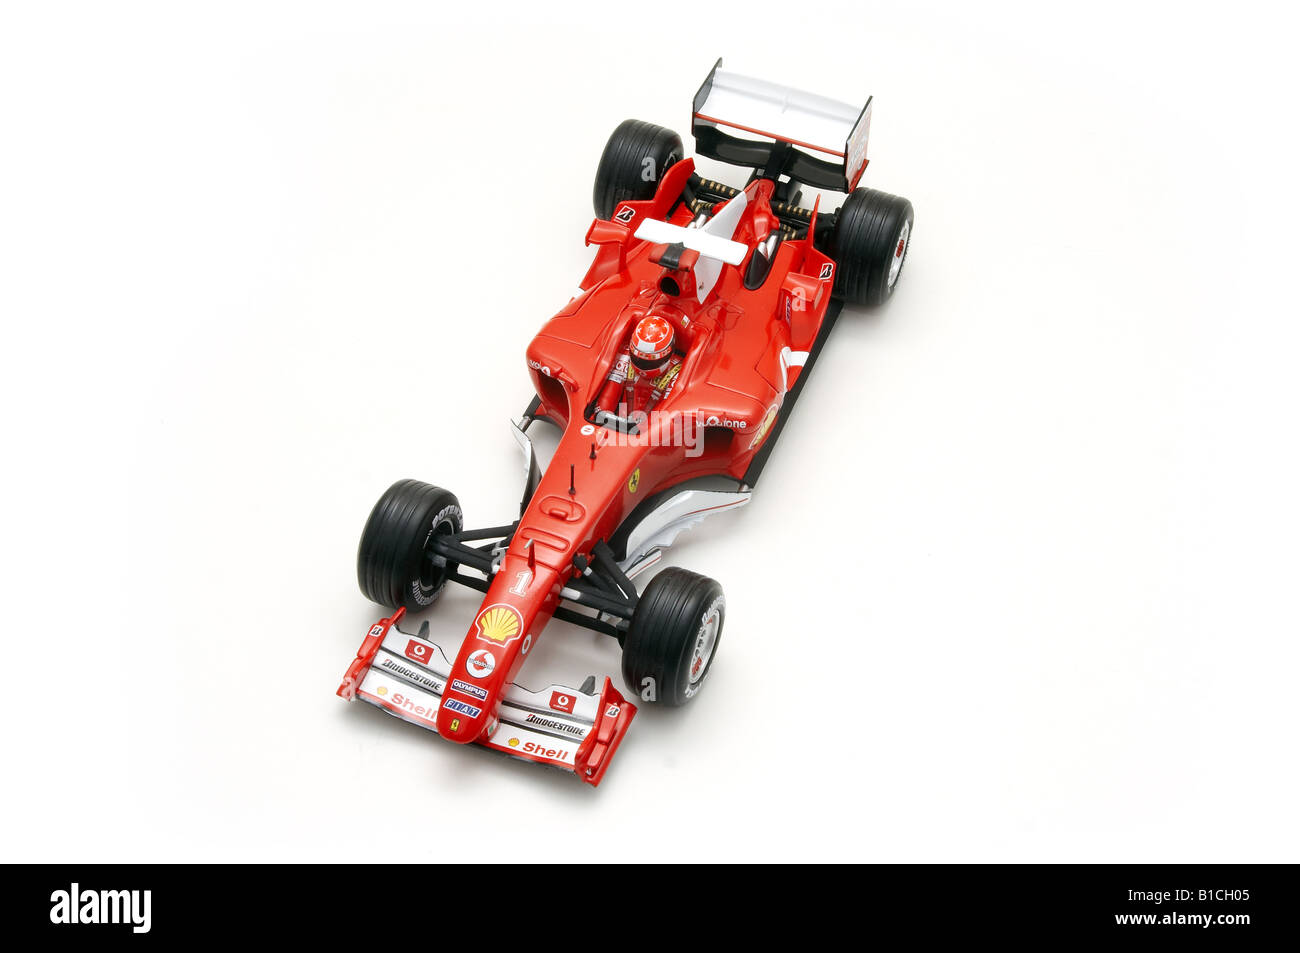 Ferrari-Formel-1-Rennwagen. Stockfoto